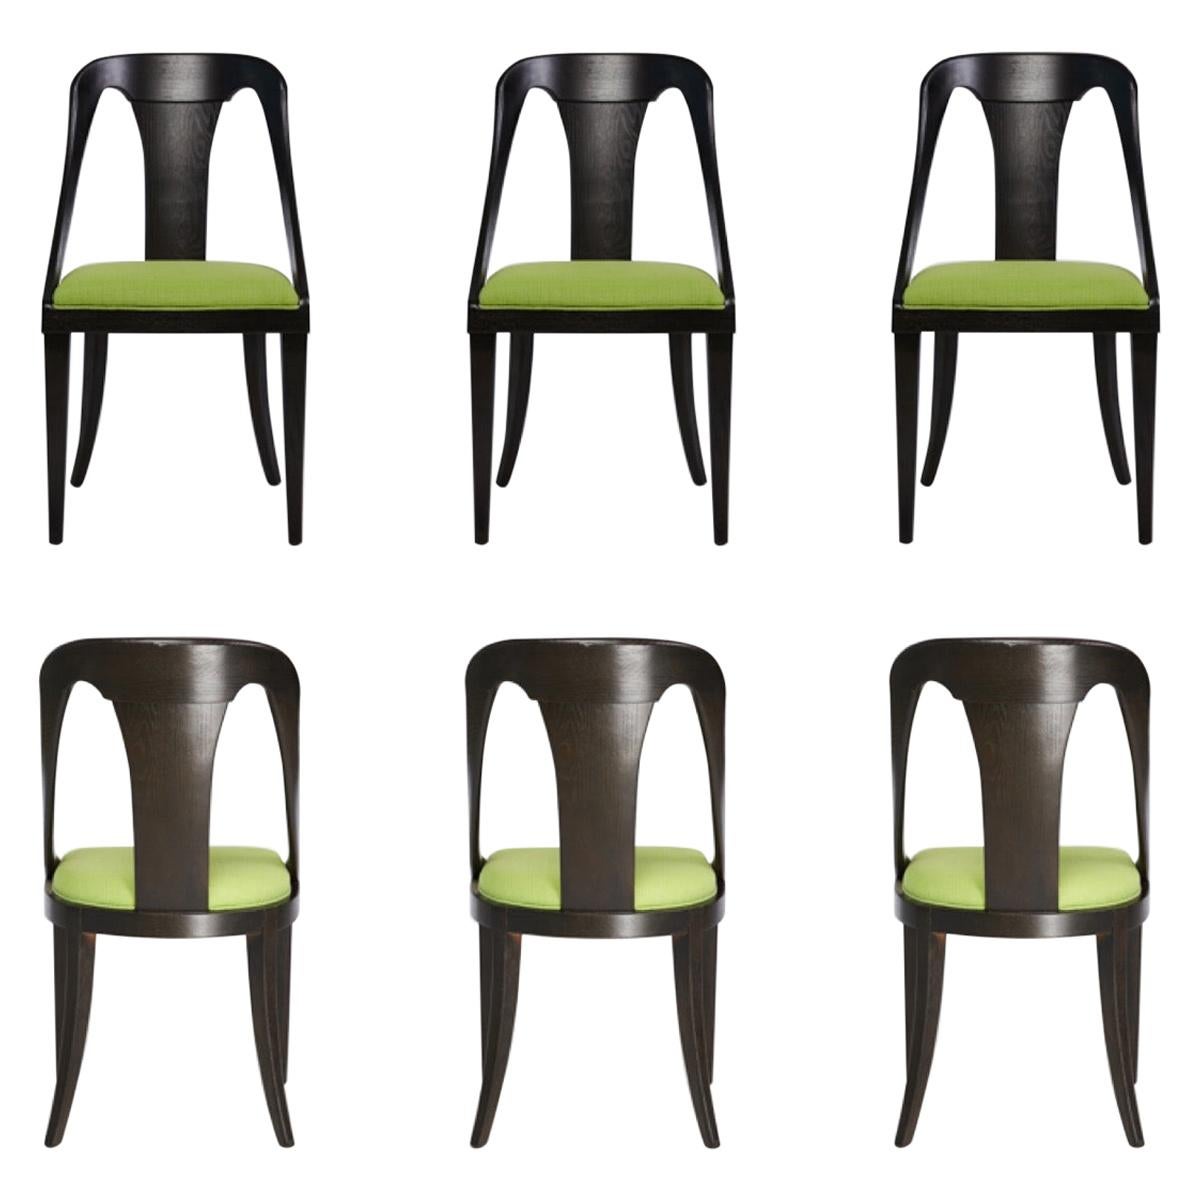 Set of 6 Midcentury Dining Chairs Designed by Jack Van der Molen